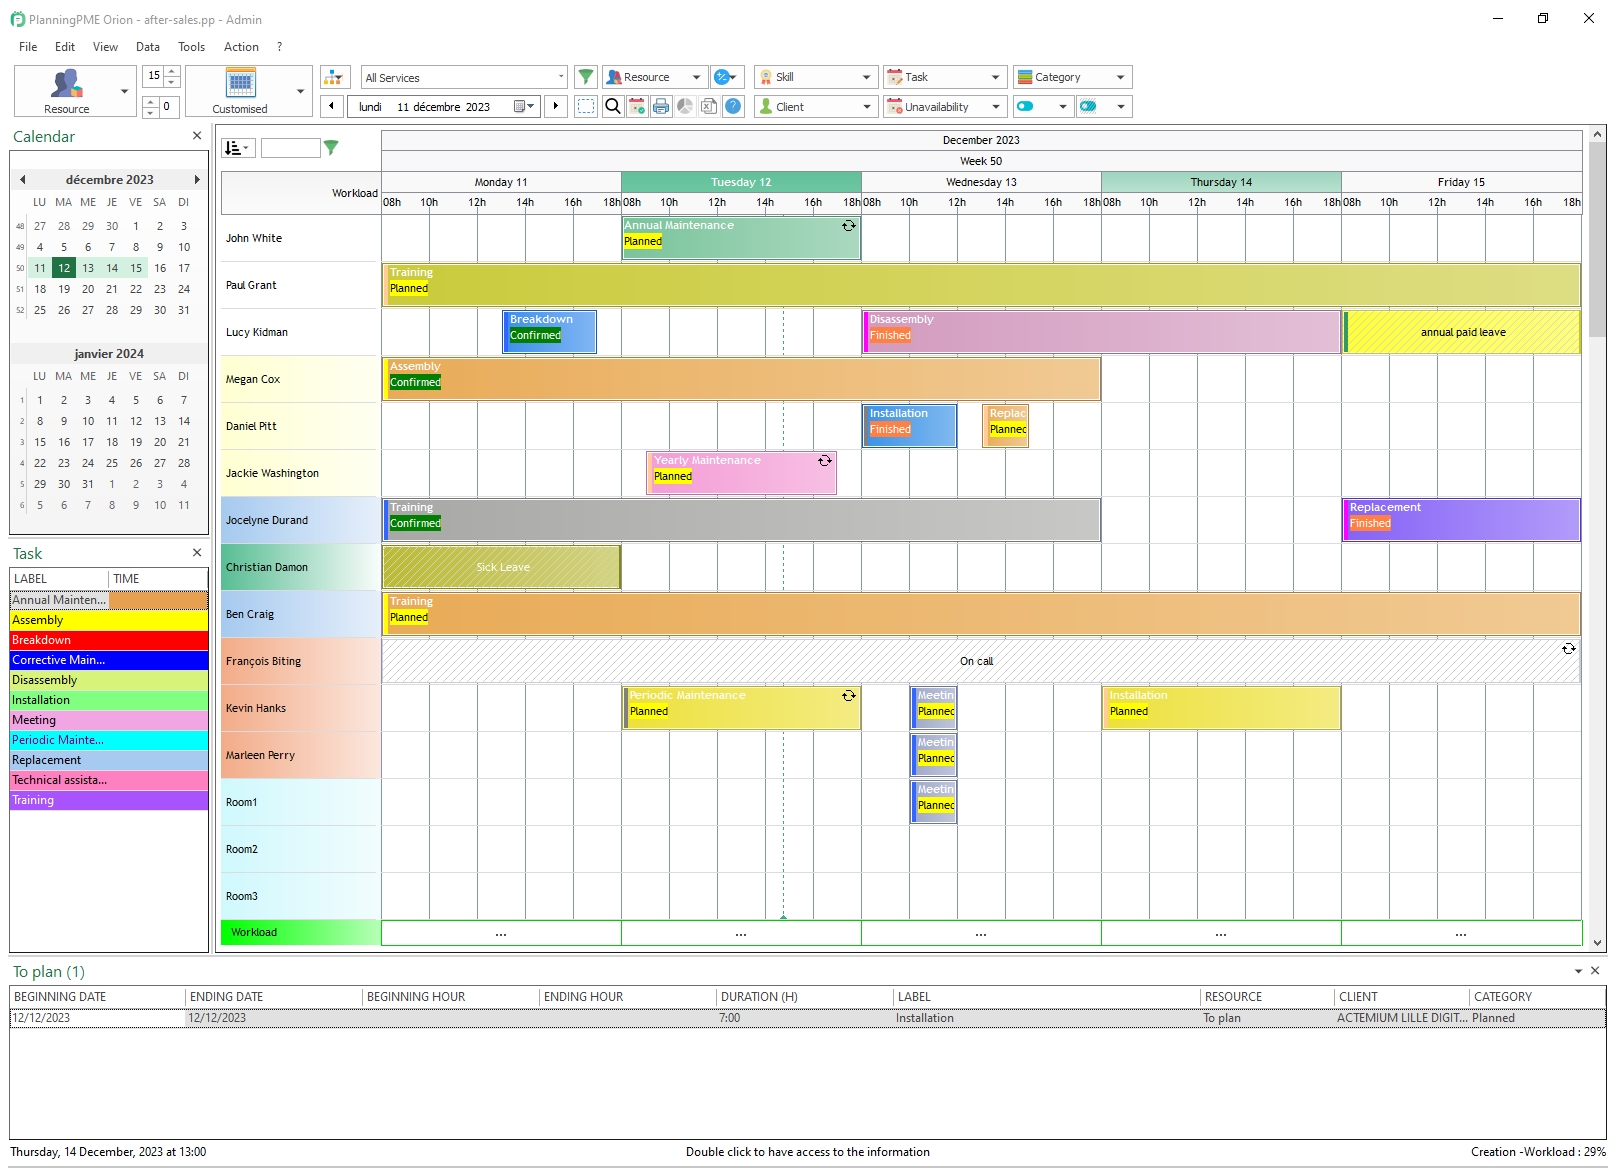 Online Employee Scheduling Software - ZoomShift